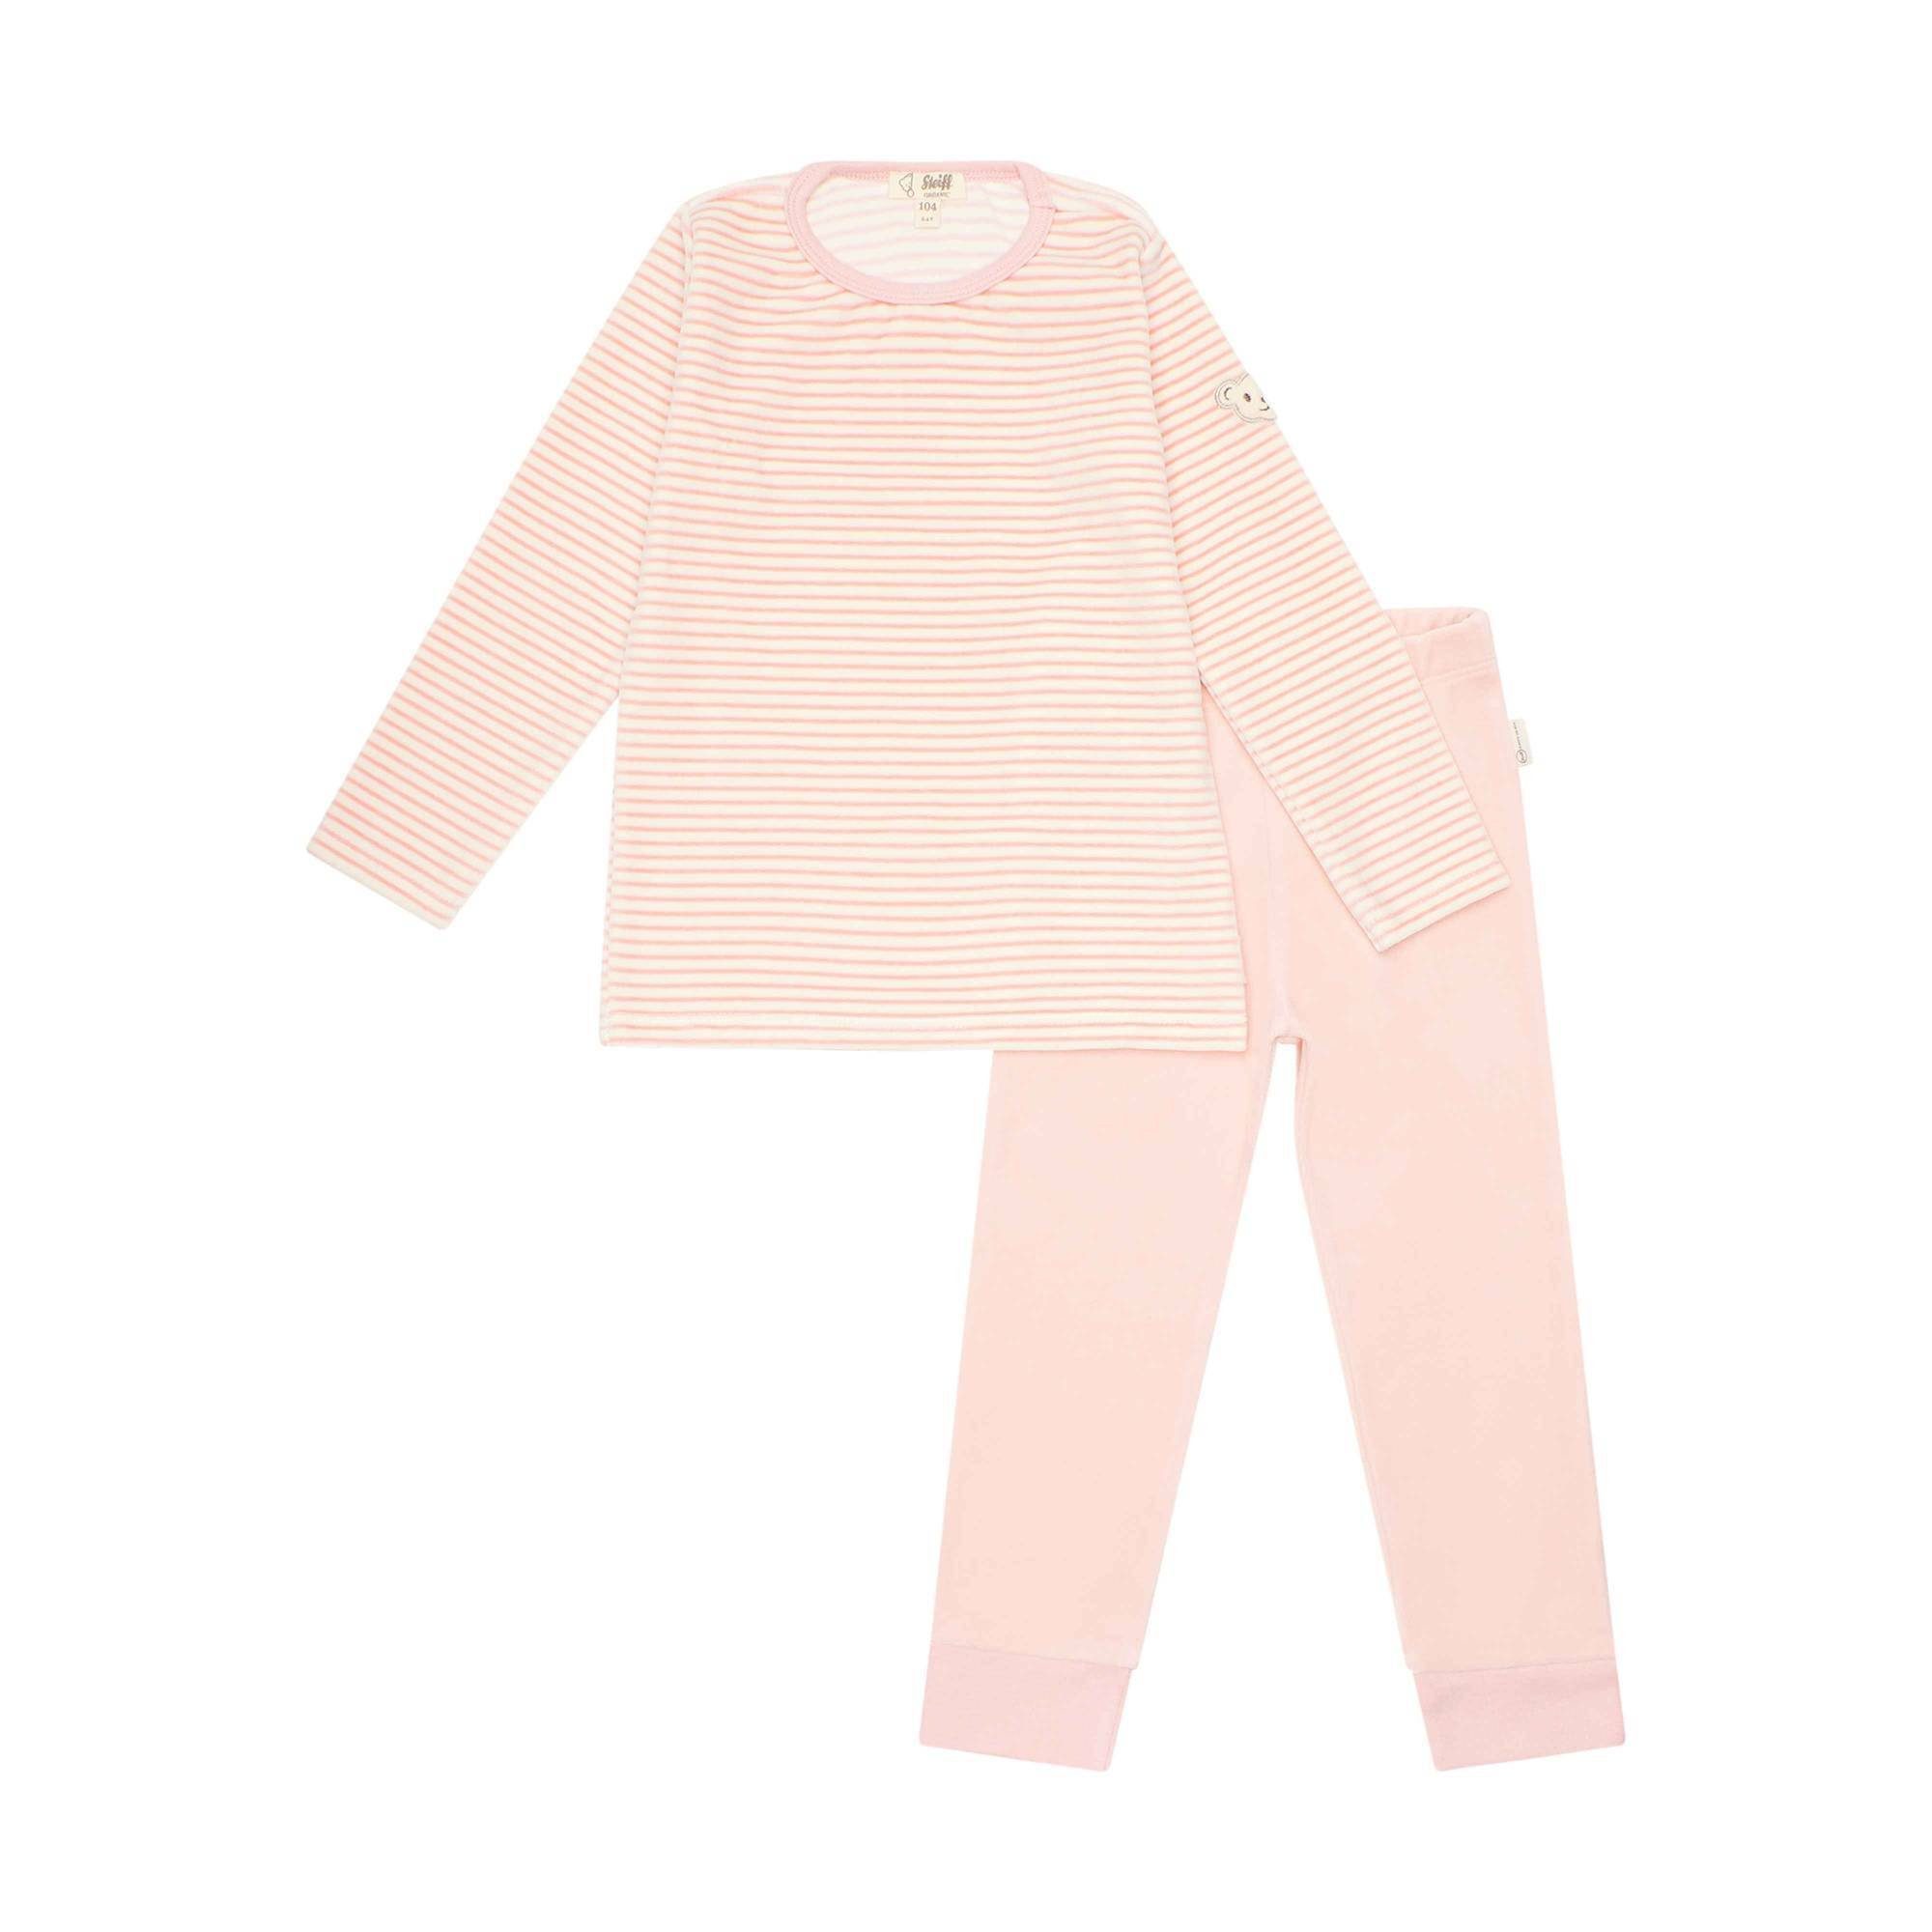 Steiff Pyjama Kinder Schlafanzug Set - Nachtwäsche, Pyjama Rosa/Weiß